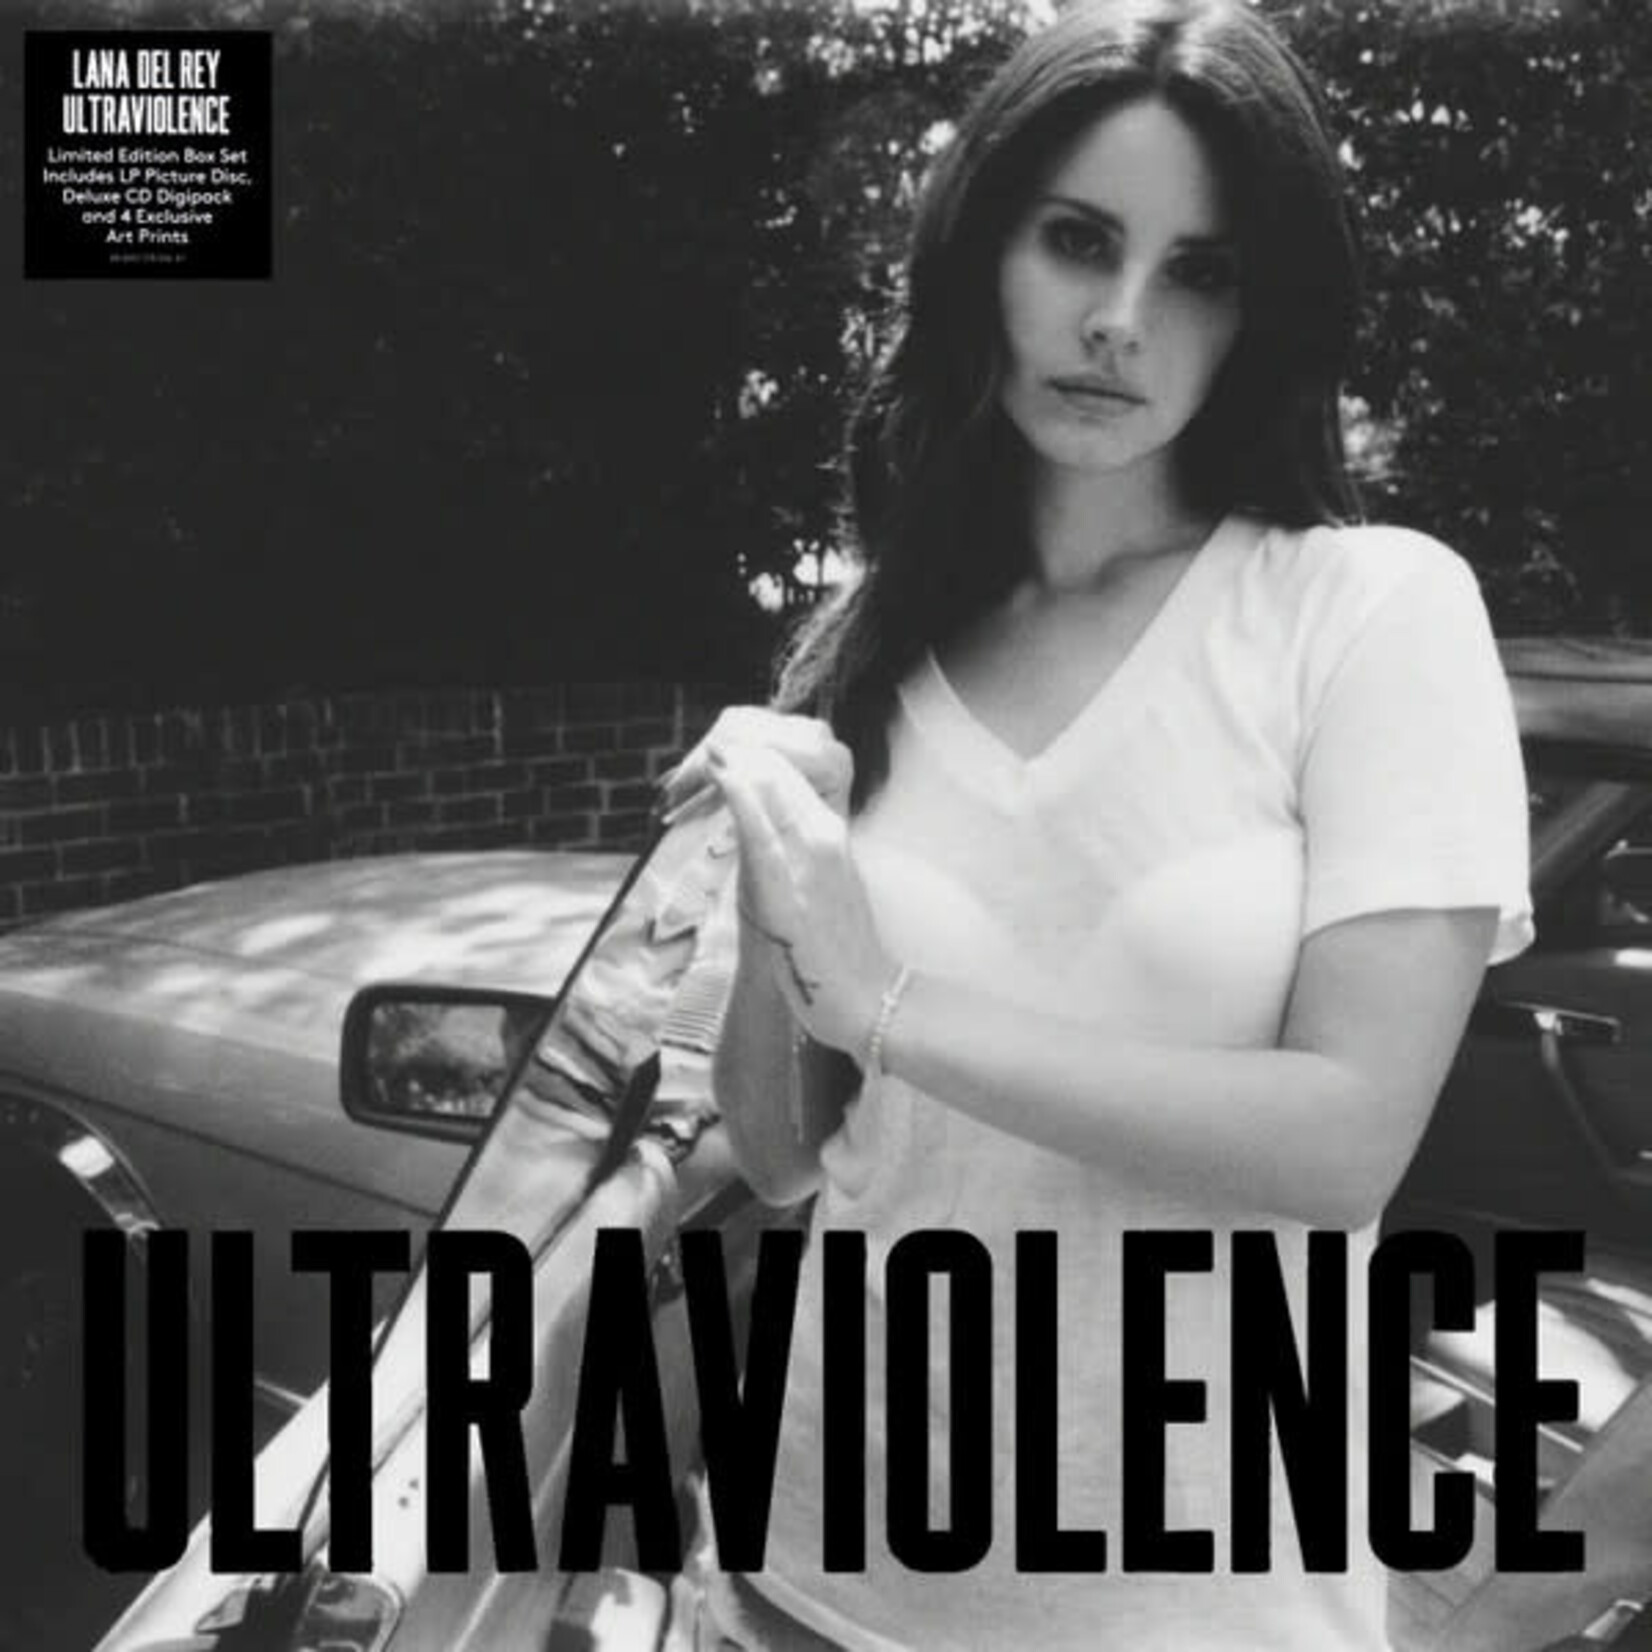 [Vintage] Lana Del Rey - Ultraviolence Deluxe Boxset (sealed, 2014 UK, promo, scored barcode)